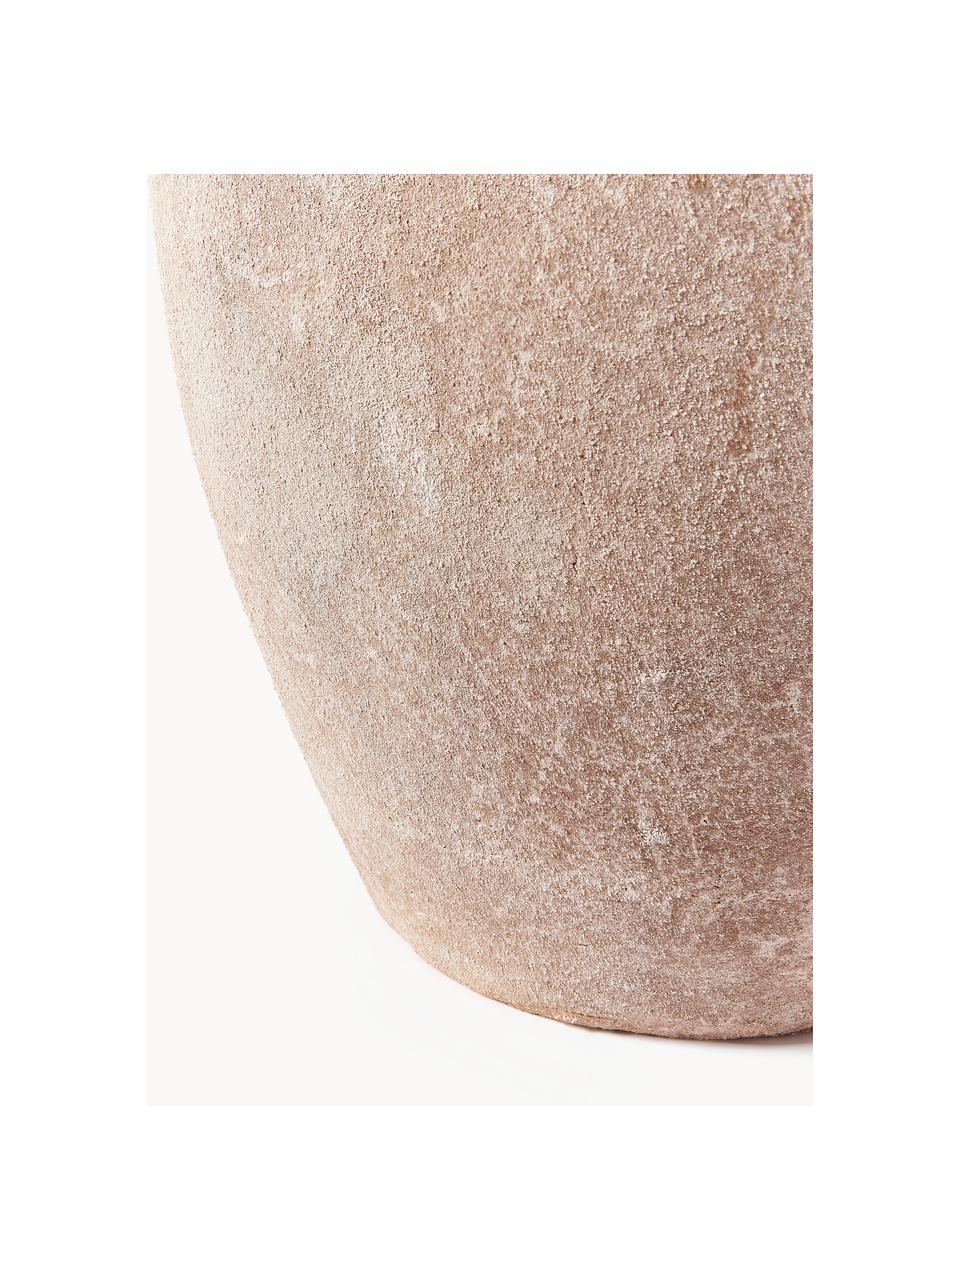 Grosse Bodenvase Leana mit Sand-Finish, H 50 cm, Terrakotta, Terrakotta, Ø 41 x H 50 cm